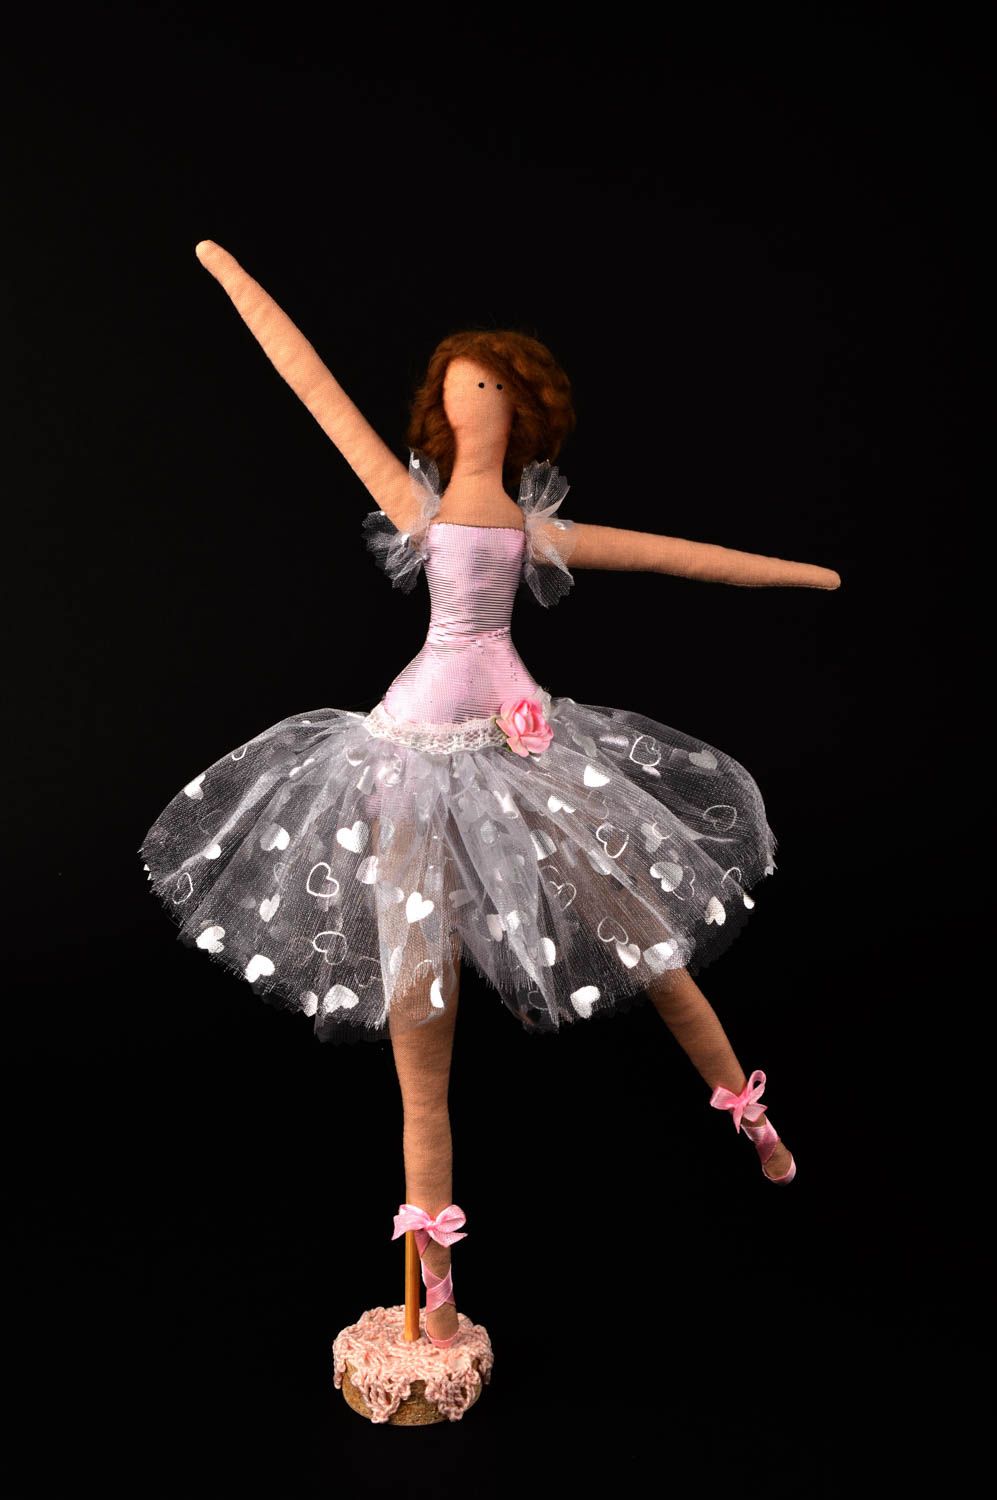 Collectible Doll Ballerina Goldilocks ドール 人形 フィギュア